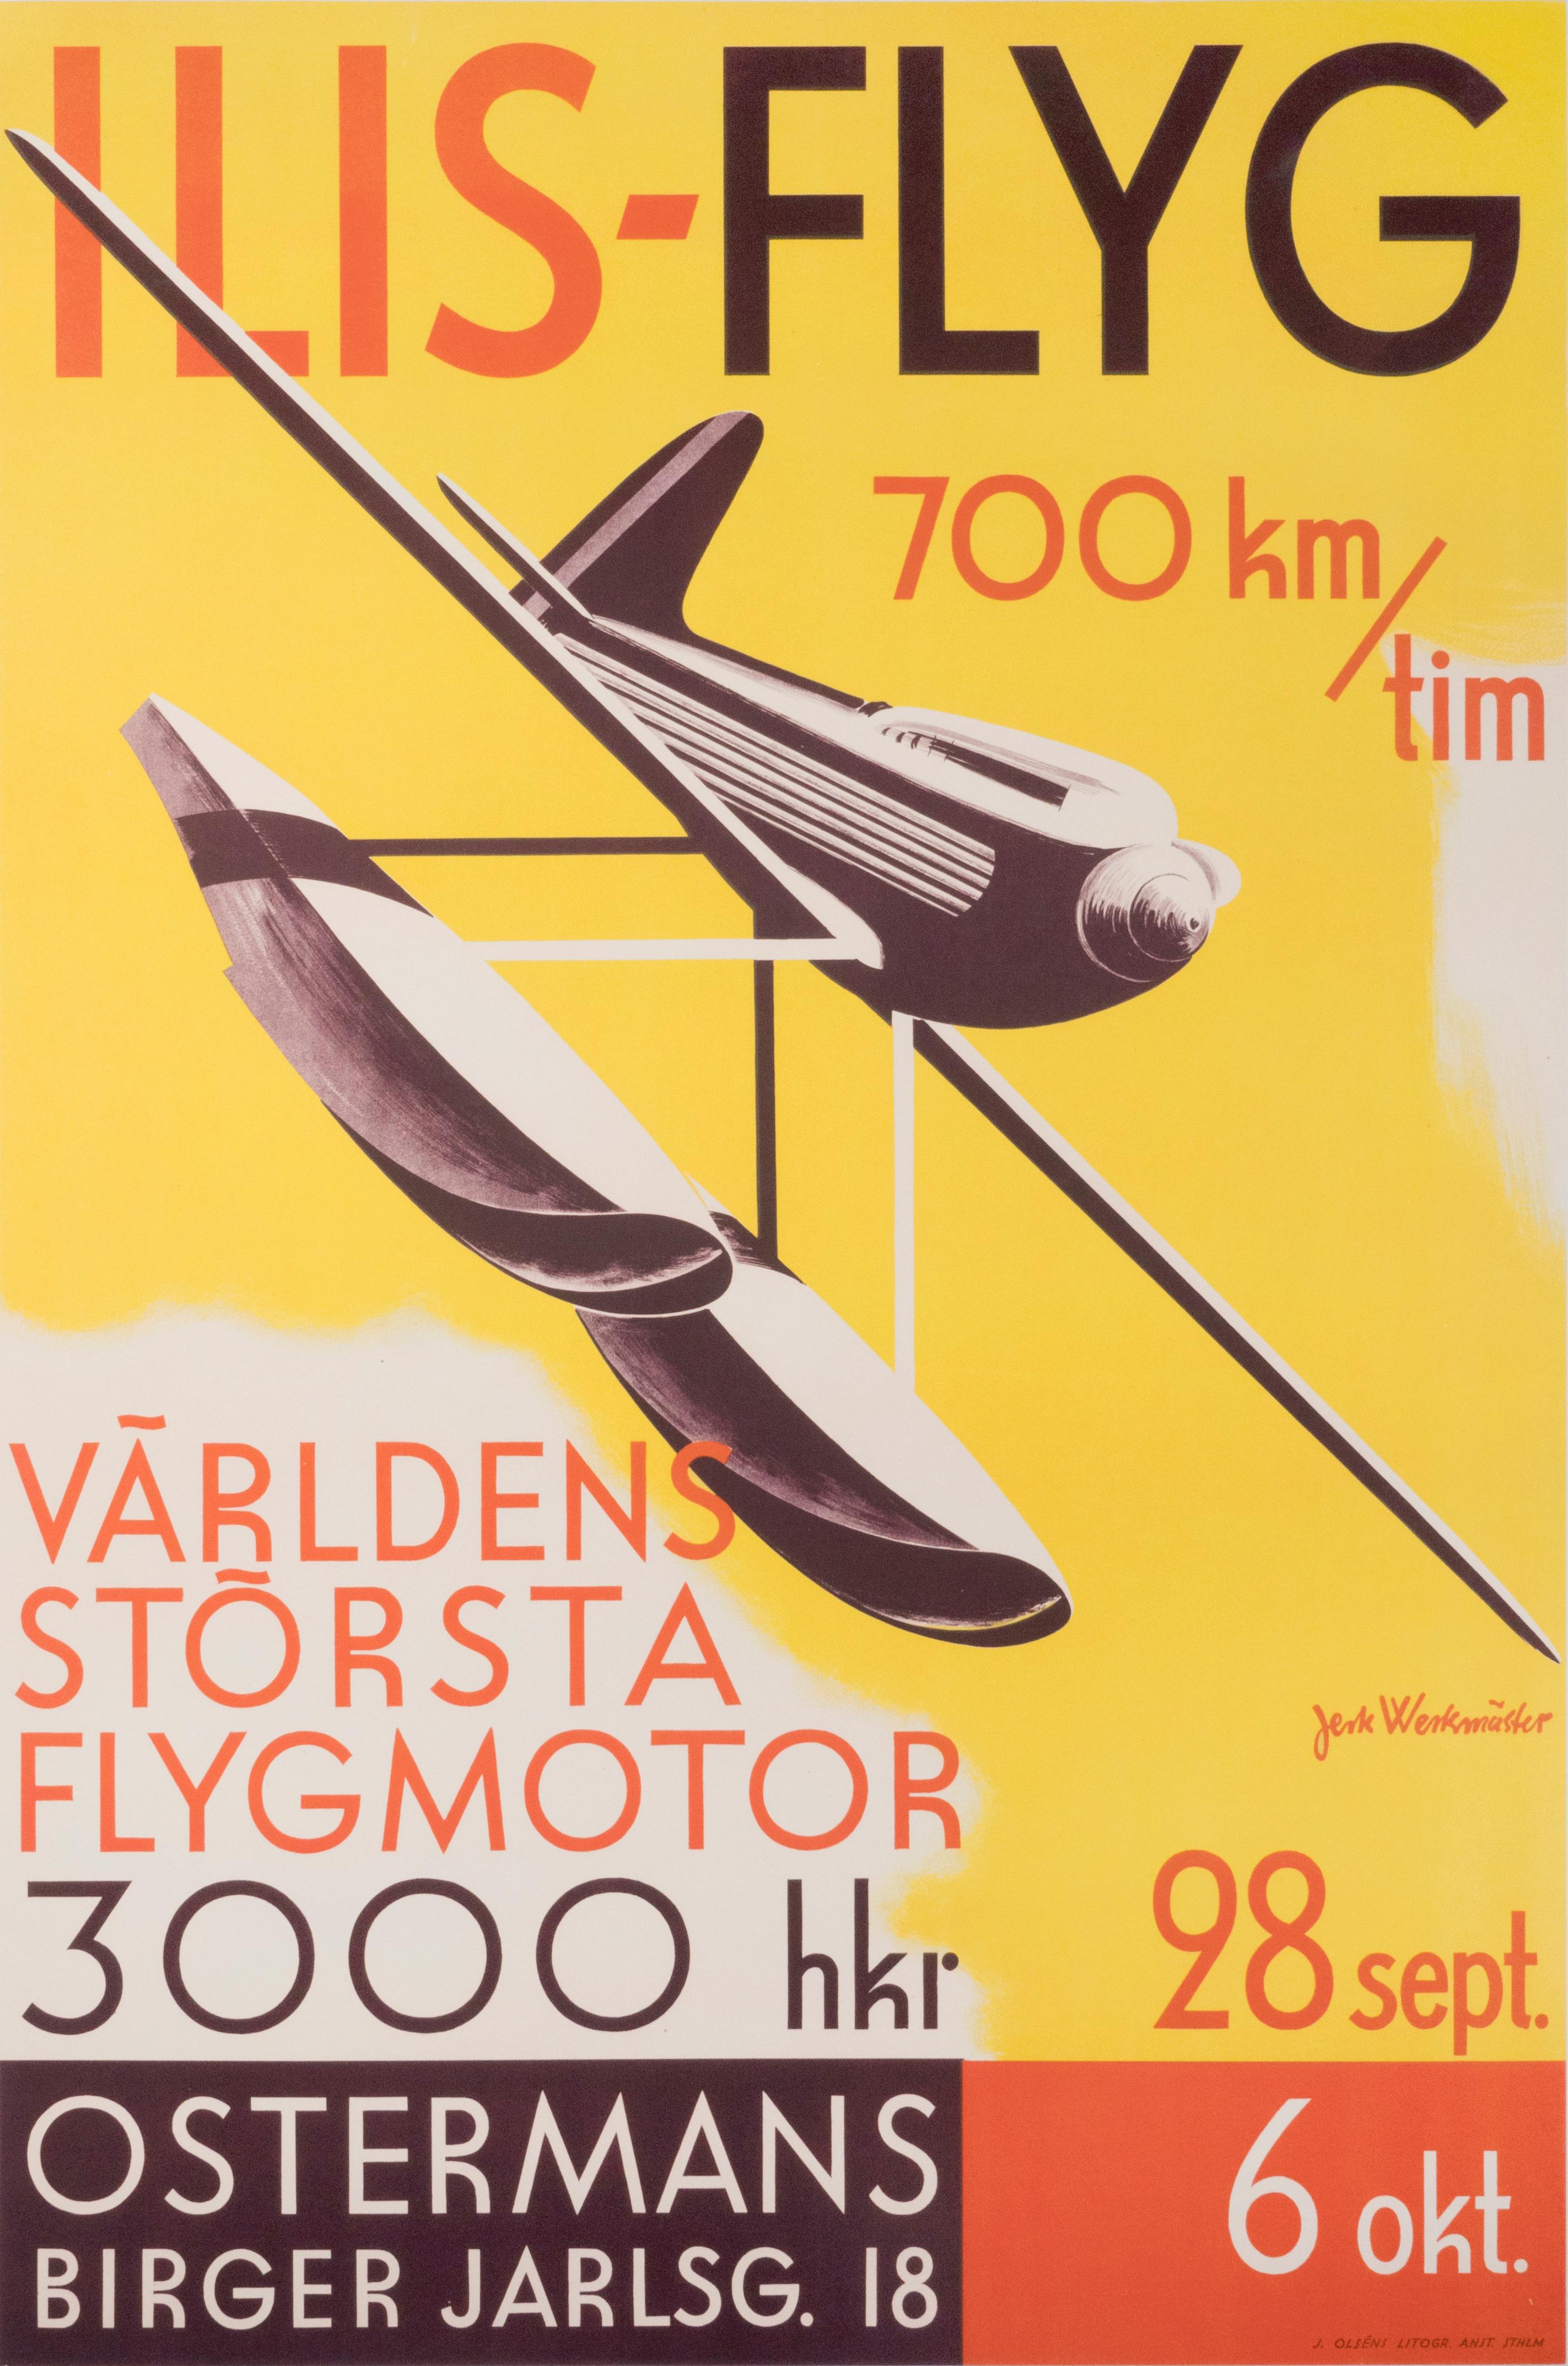 Jerk Werkmaster Figurative Print - "Ilis-Flyg - World's Largest Airplane Motor" Swedish Aviation Original Poster